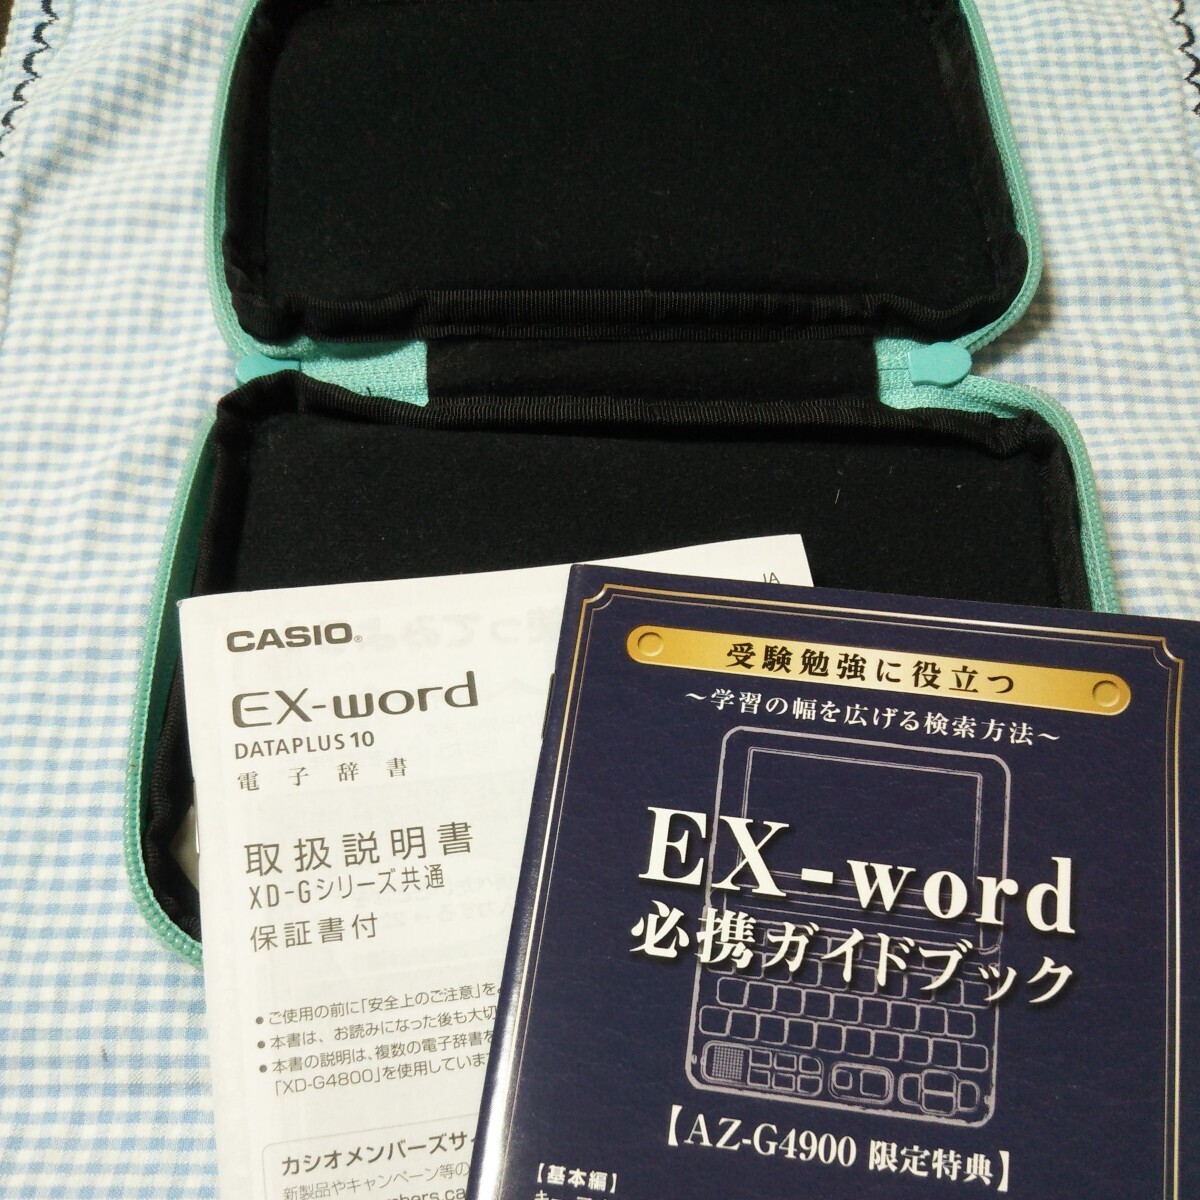 CASIO 電子辞書 EX-word DATAPLUS10 ホワイト カラー電子辞書 XD-K4900 ケース、説明書ありの画像6